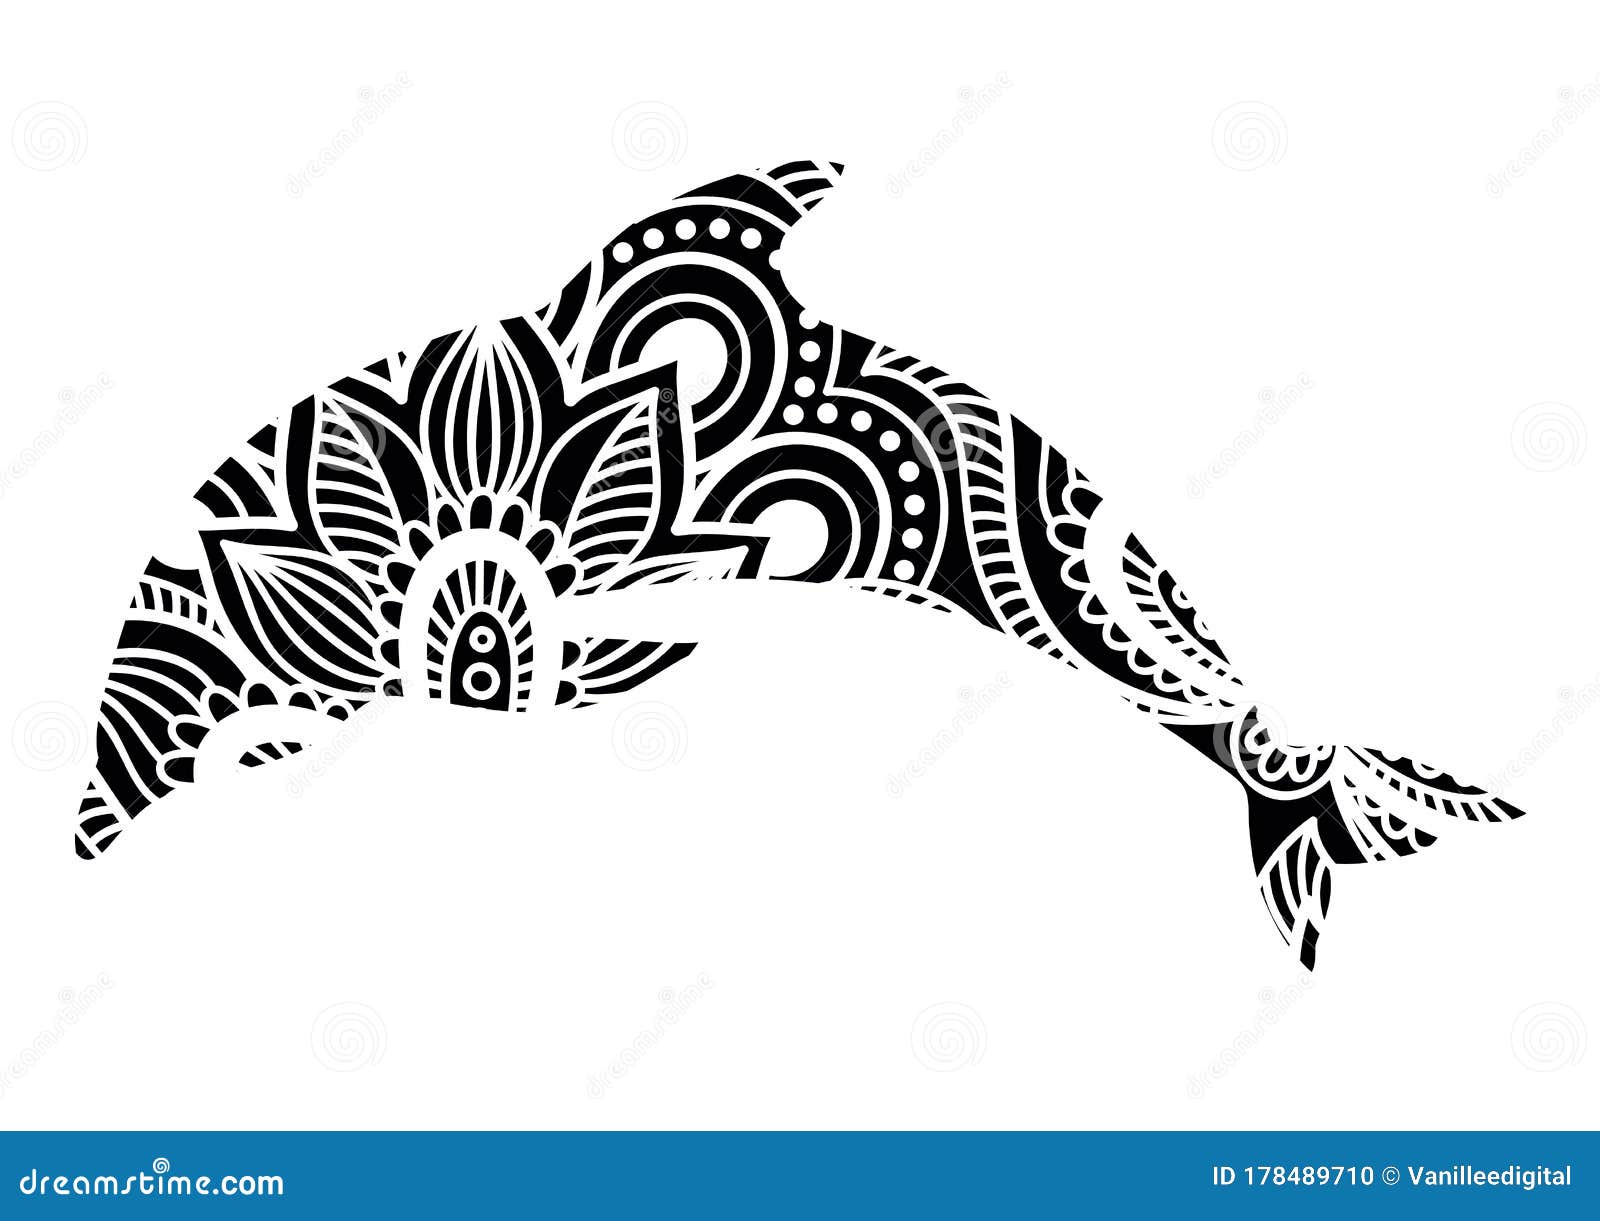 Download Dolphin Mandala Illustration Stock Illustration Illustration Of Mandala Dolphin 178489710